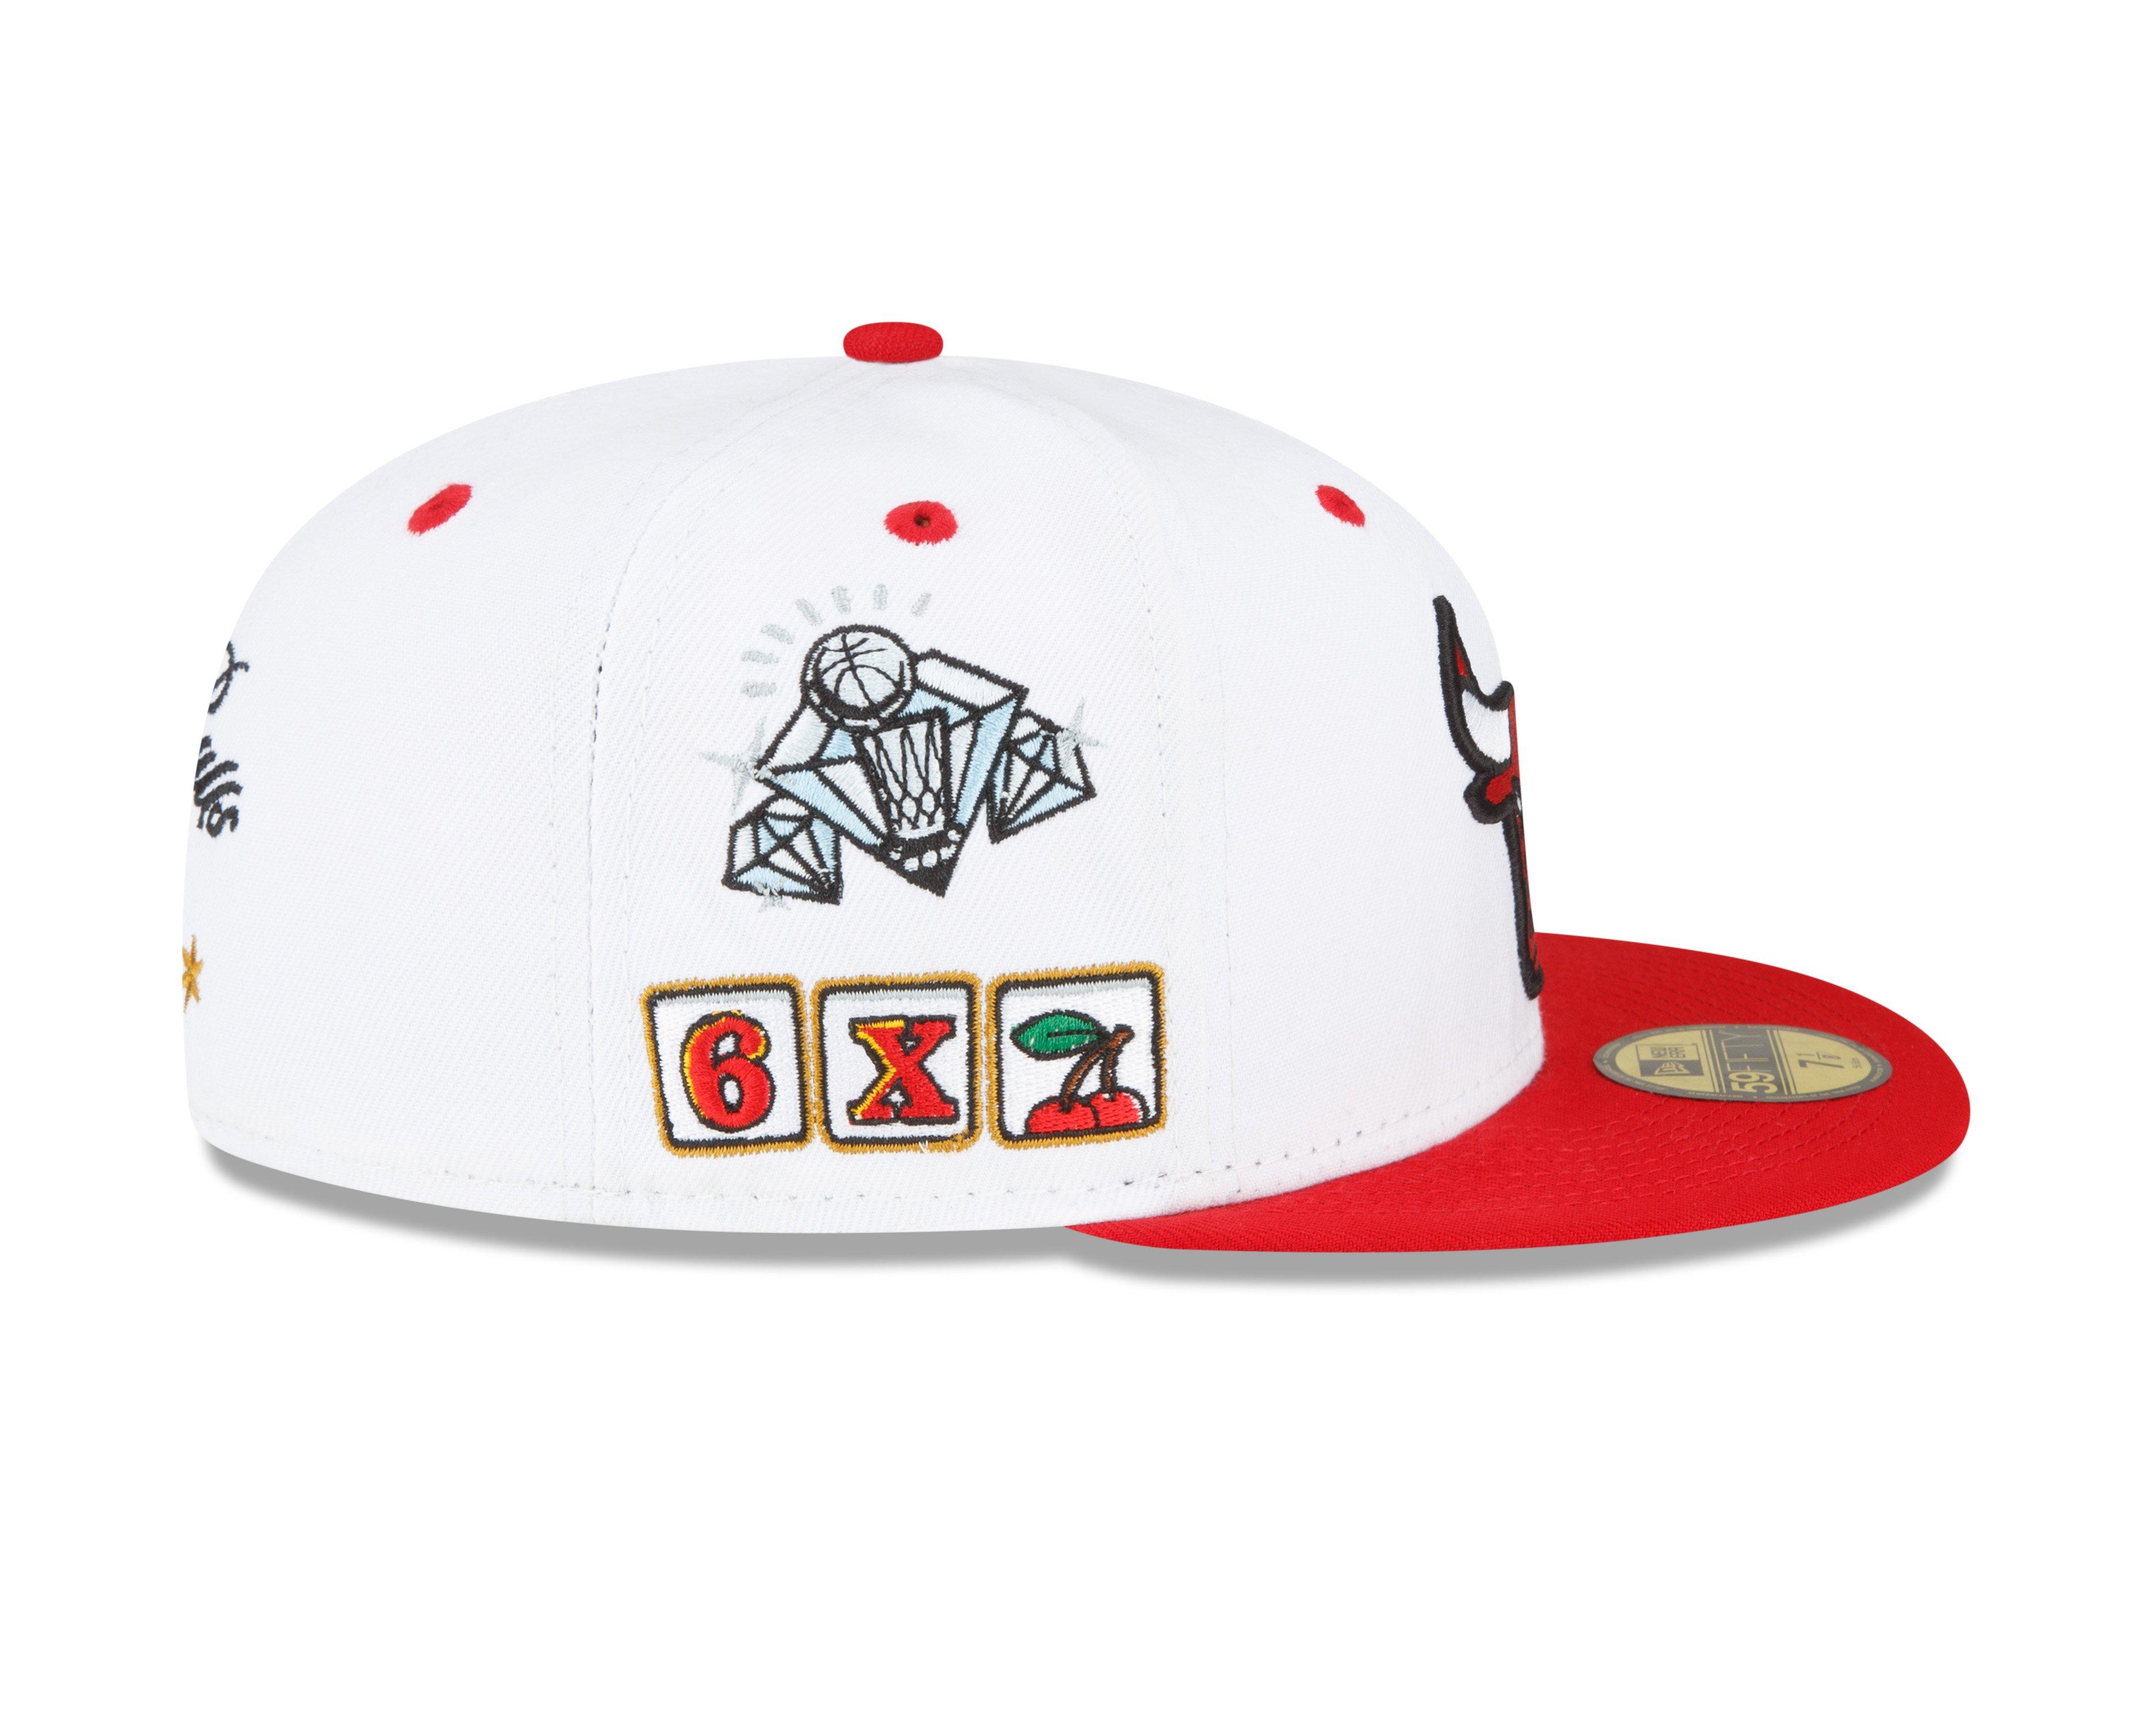 Bedrog ontspannen achterlijk persoon New Era Chicago Bulls Casino Cherry AJ11 59FIFTY Fitted Hat